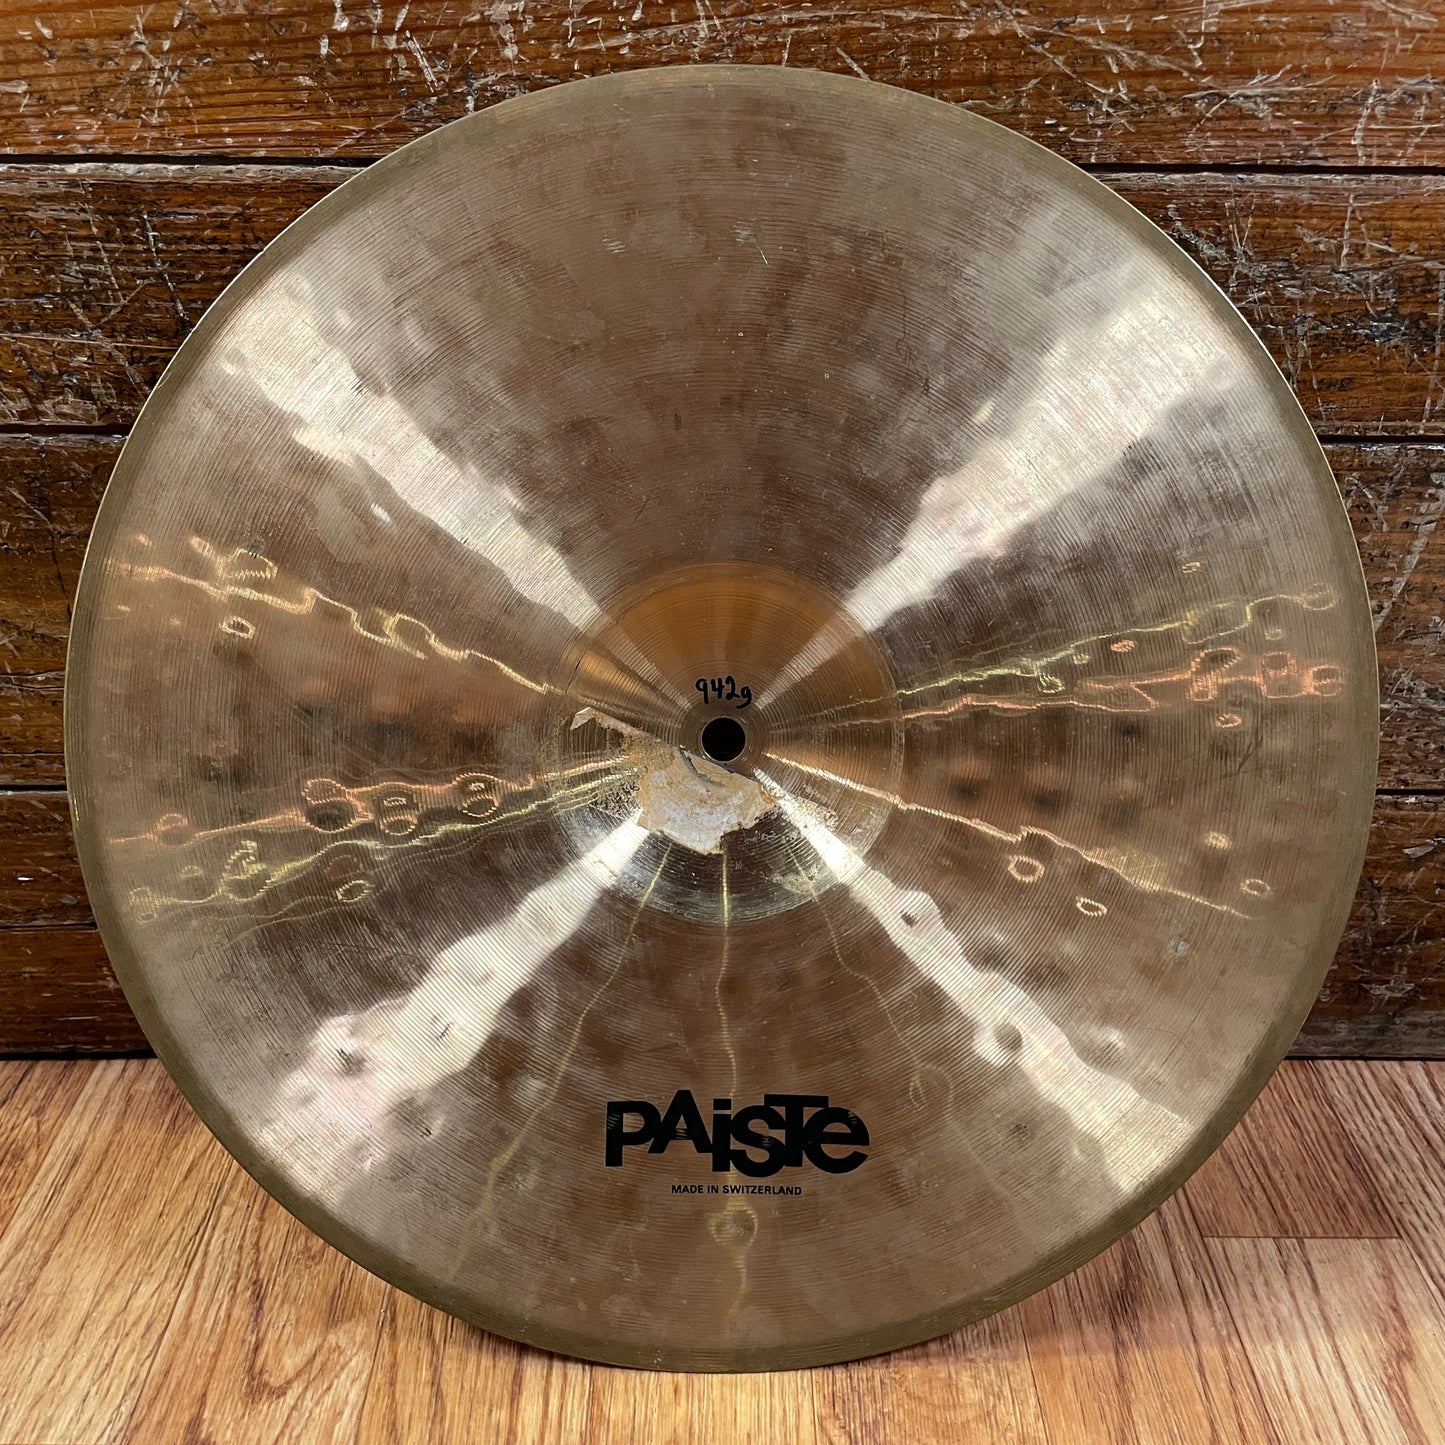 14" Paiste Alpha Sound Edge Hi-Hat Cymbal Pair 942g/1220g *Video Demo*